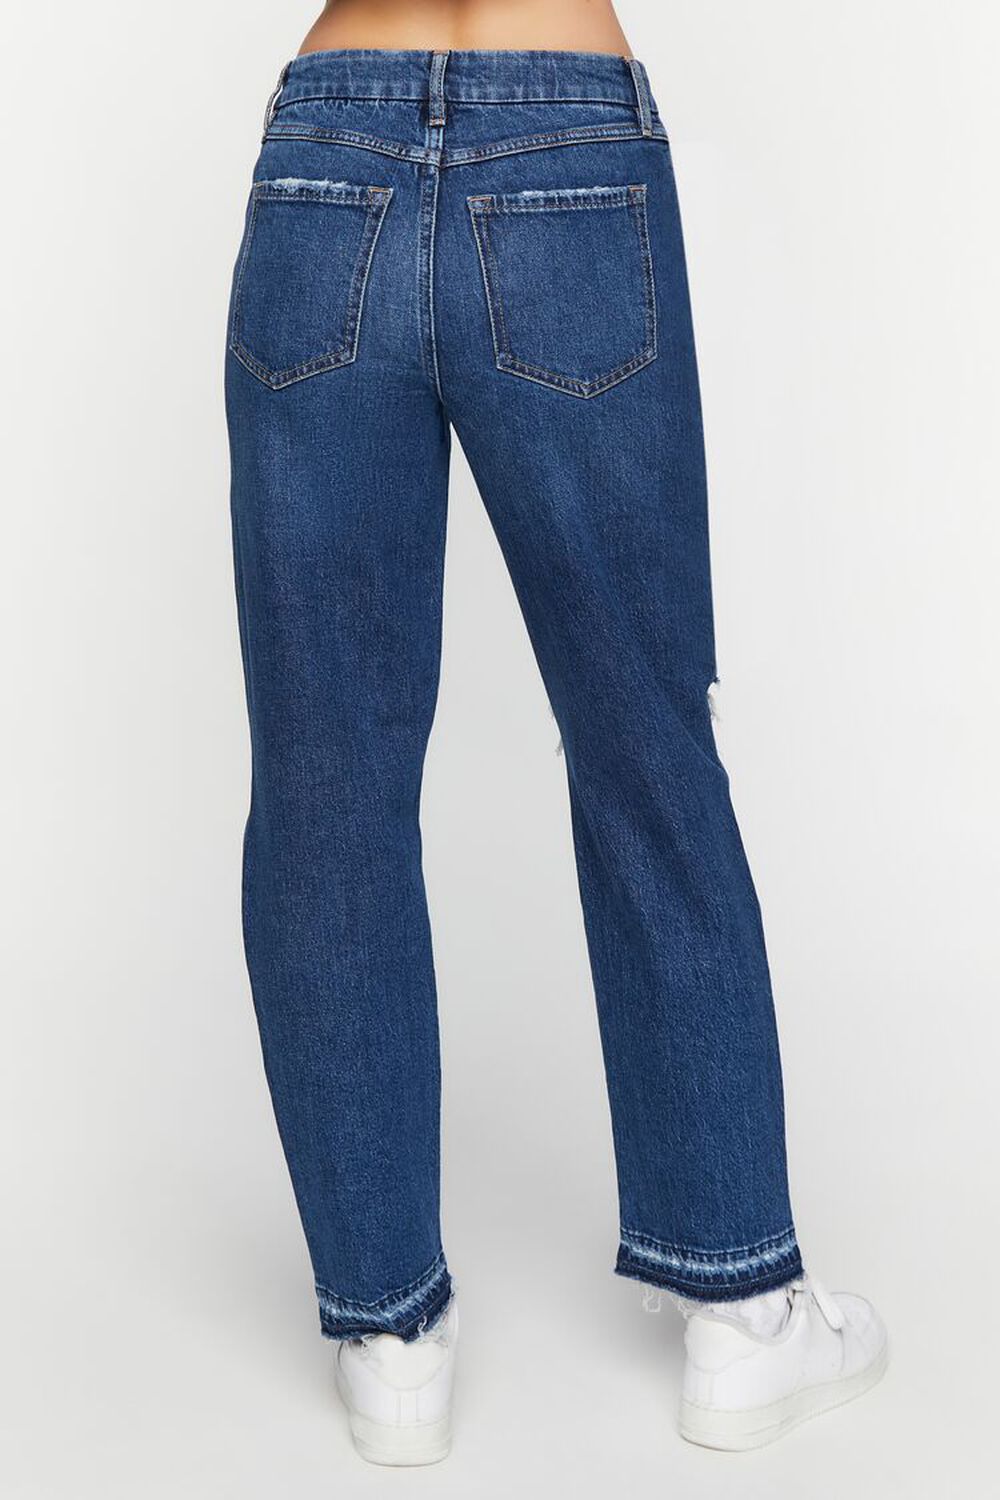 DARK DENIM Recycled Cotton Distressed Straight-Leg Jeans, image 3